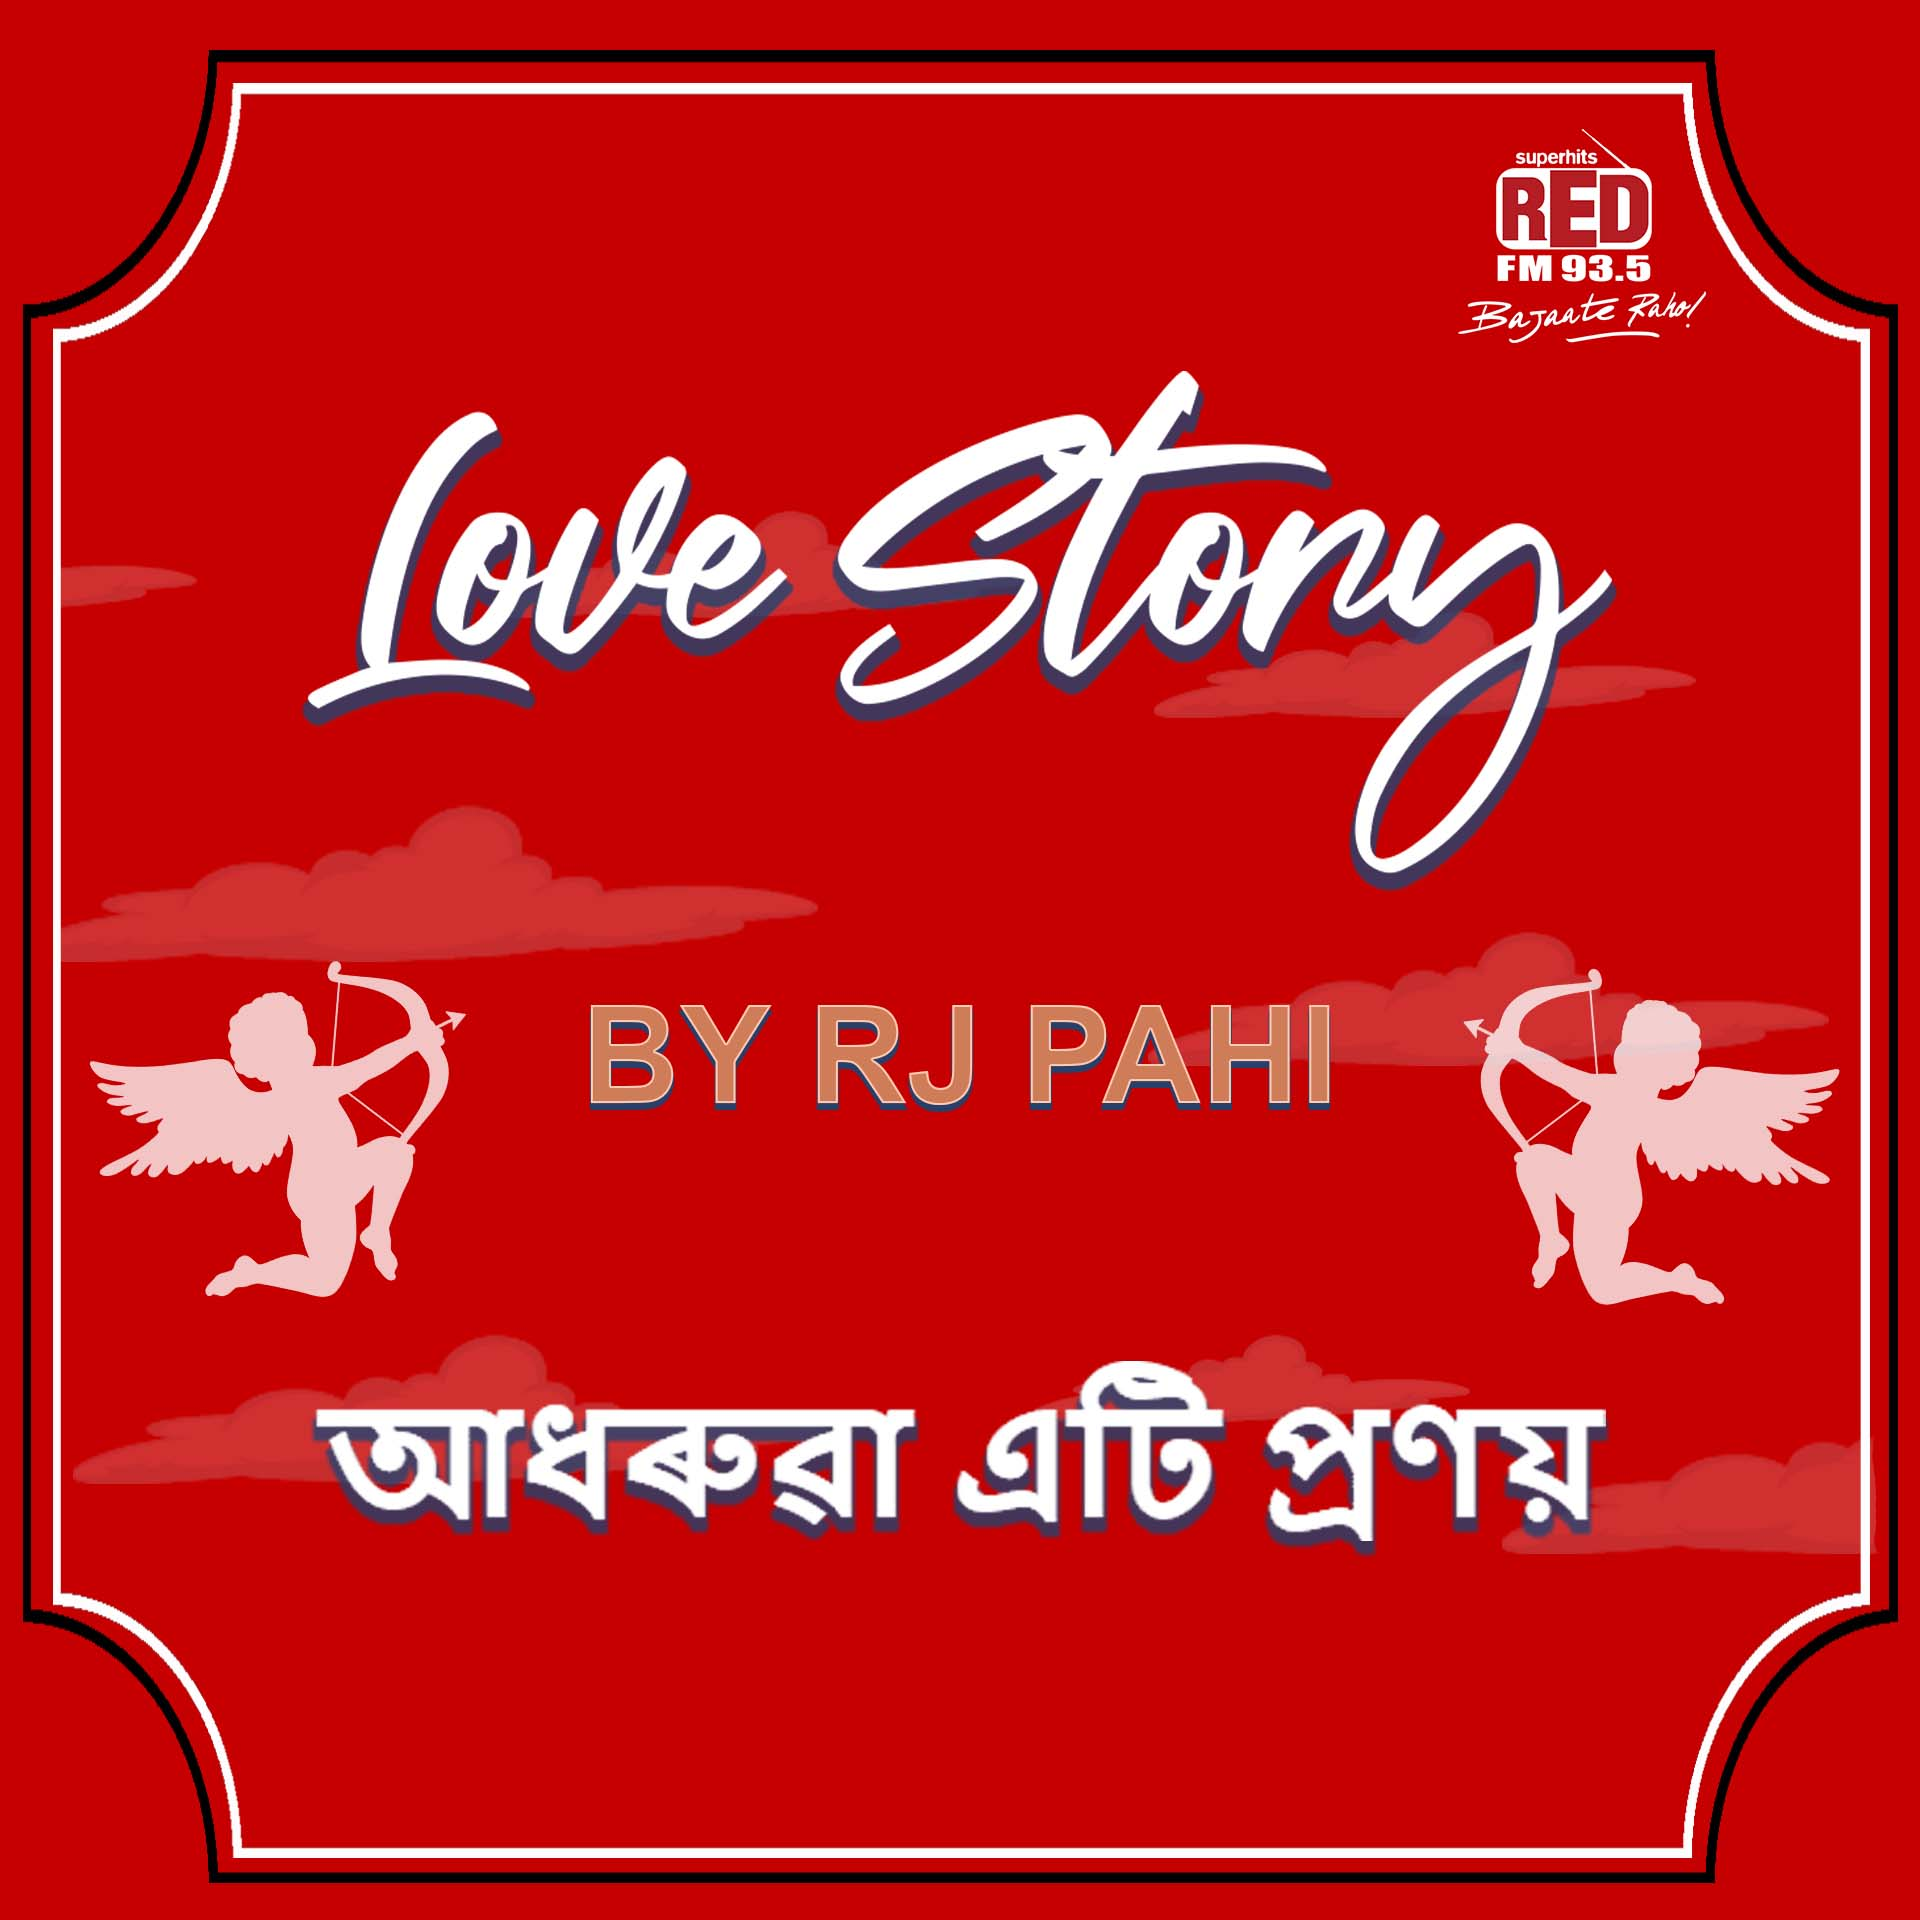 RED FM LOVE STORY || RJ PAHI || THE DOCTOR 13 JAN